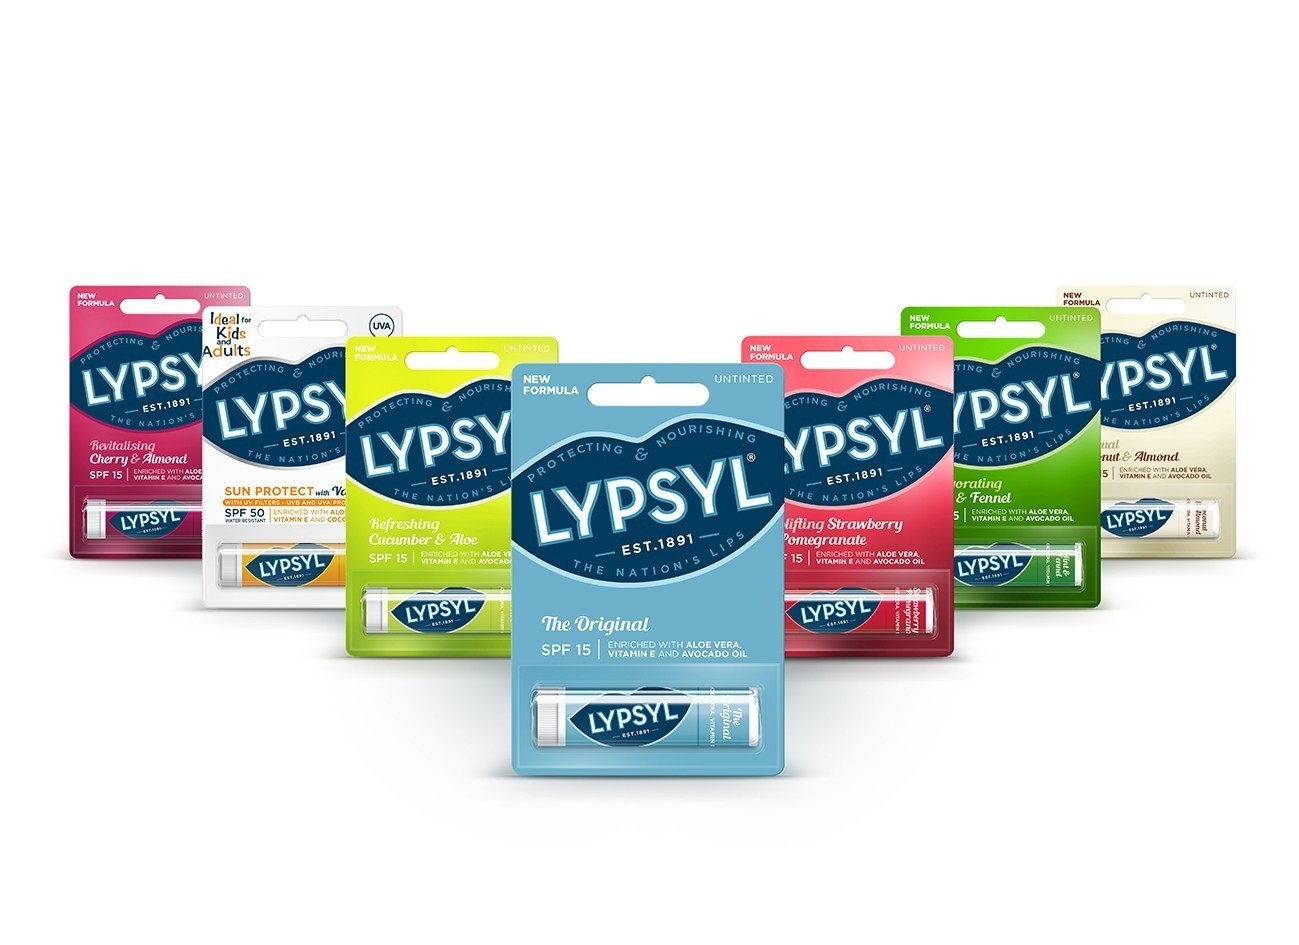 Seymourpowell – Lypsyl lip balm